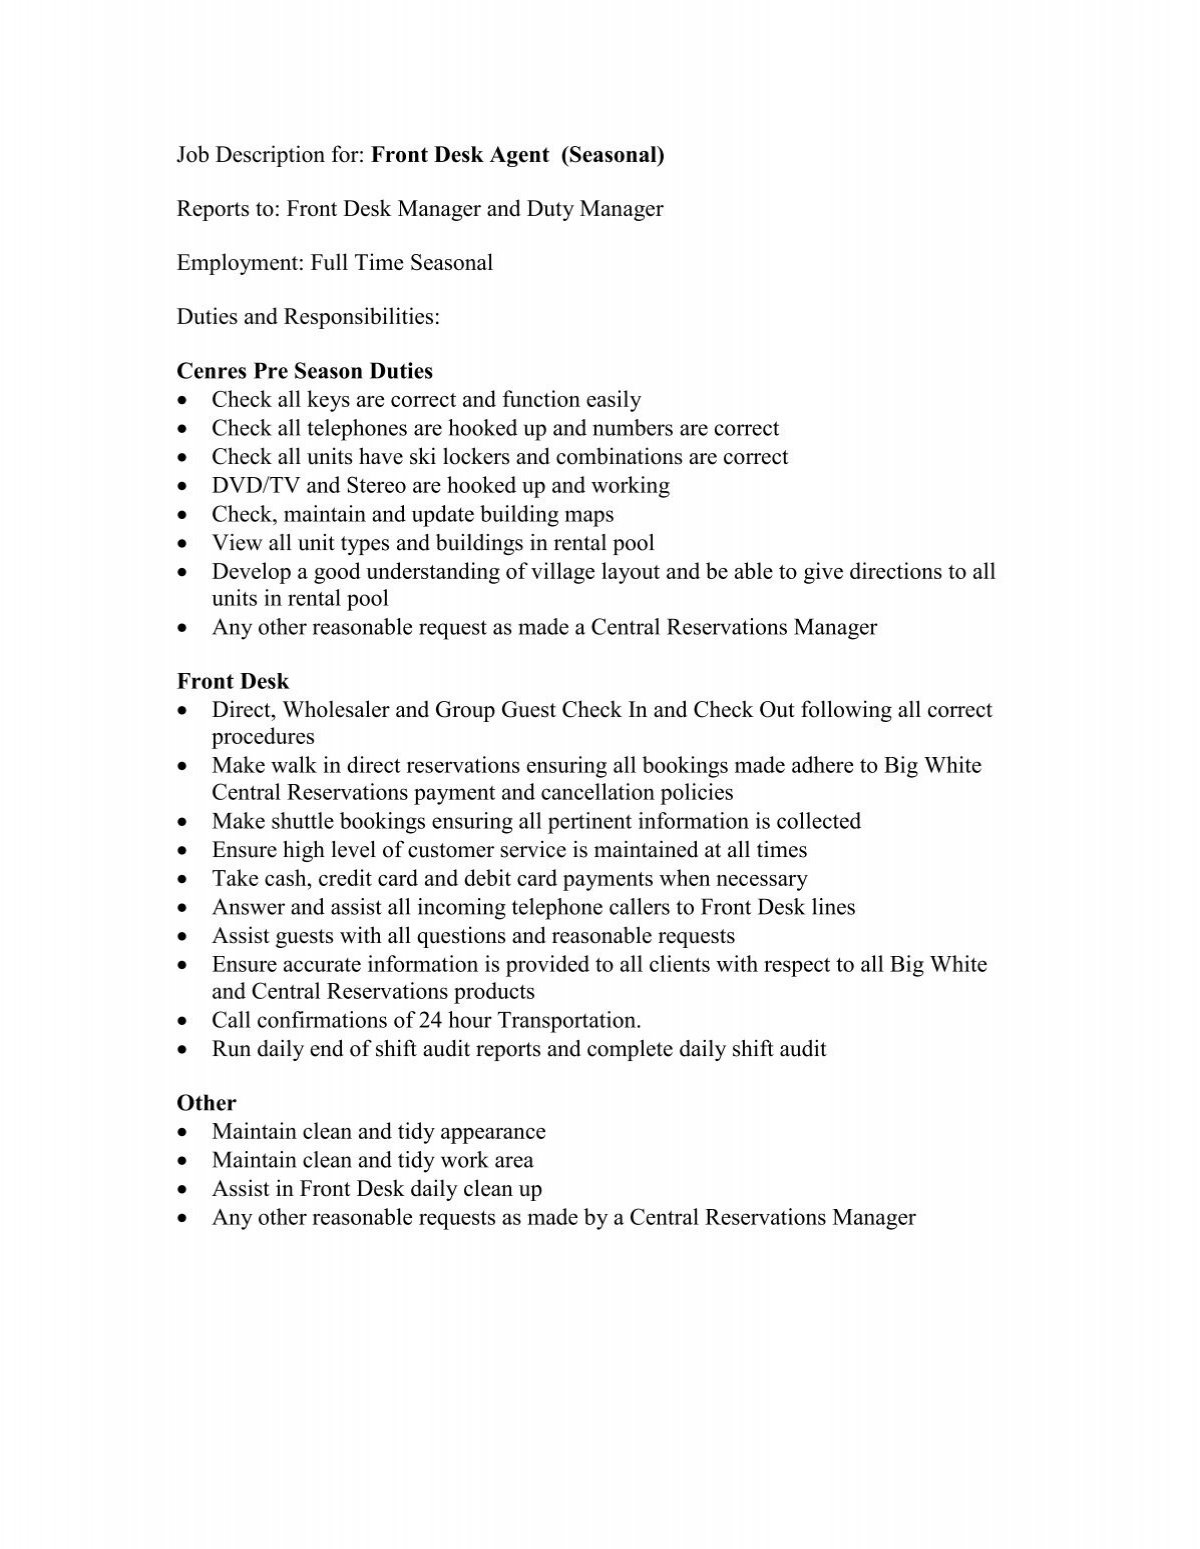 Job Description For Front Desk Agent Seasonal Reports To Front